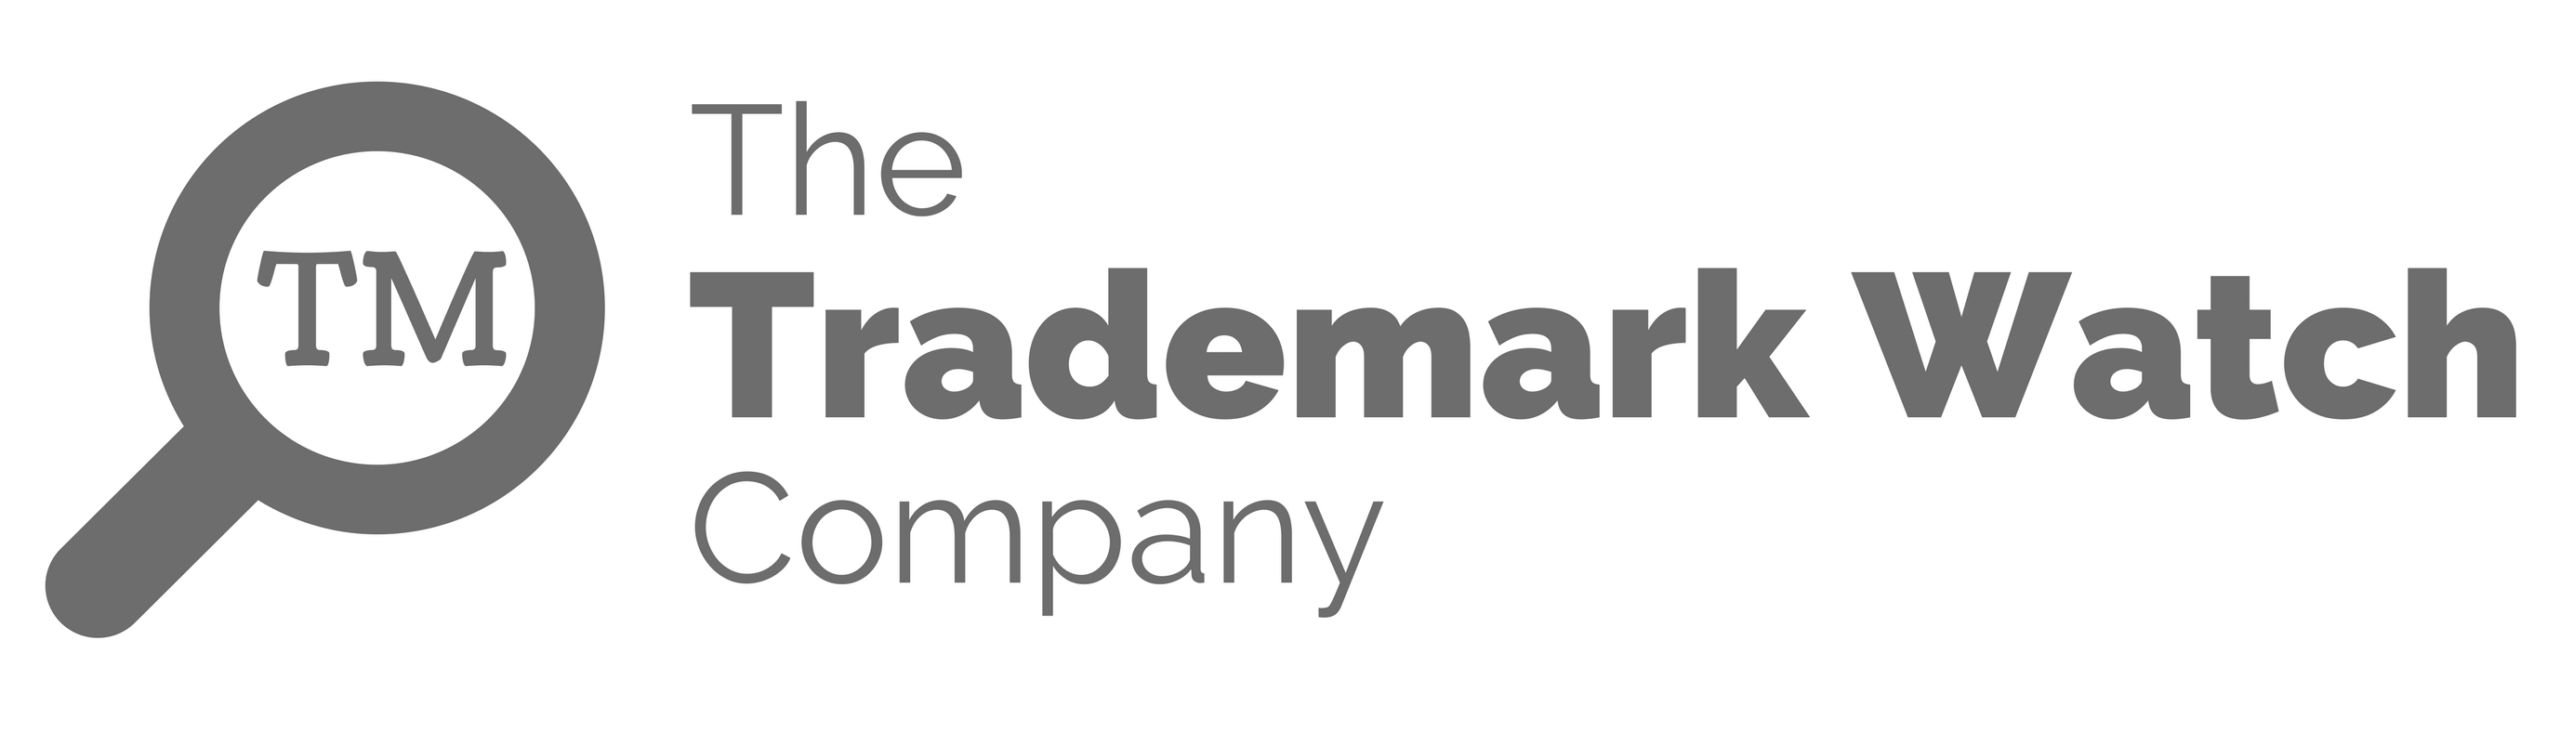 The Trademark Watch Company